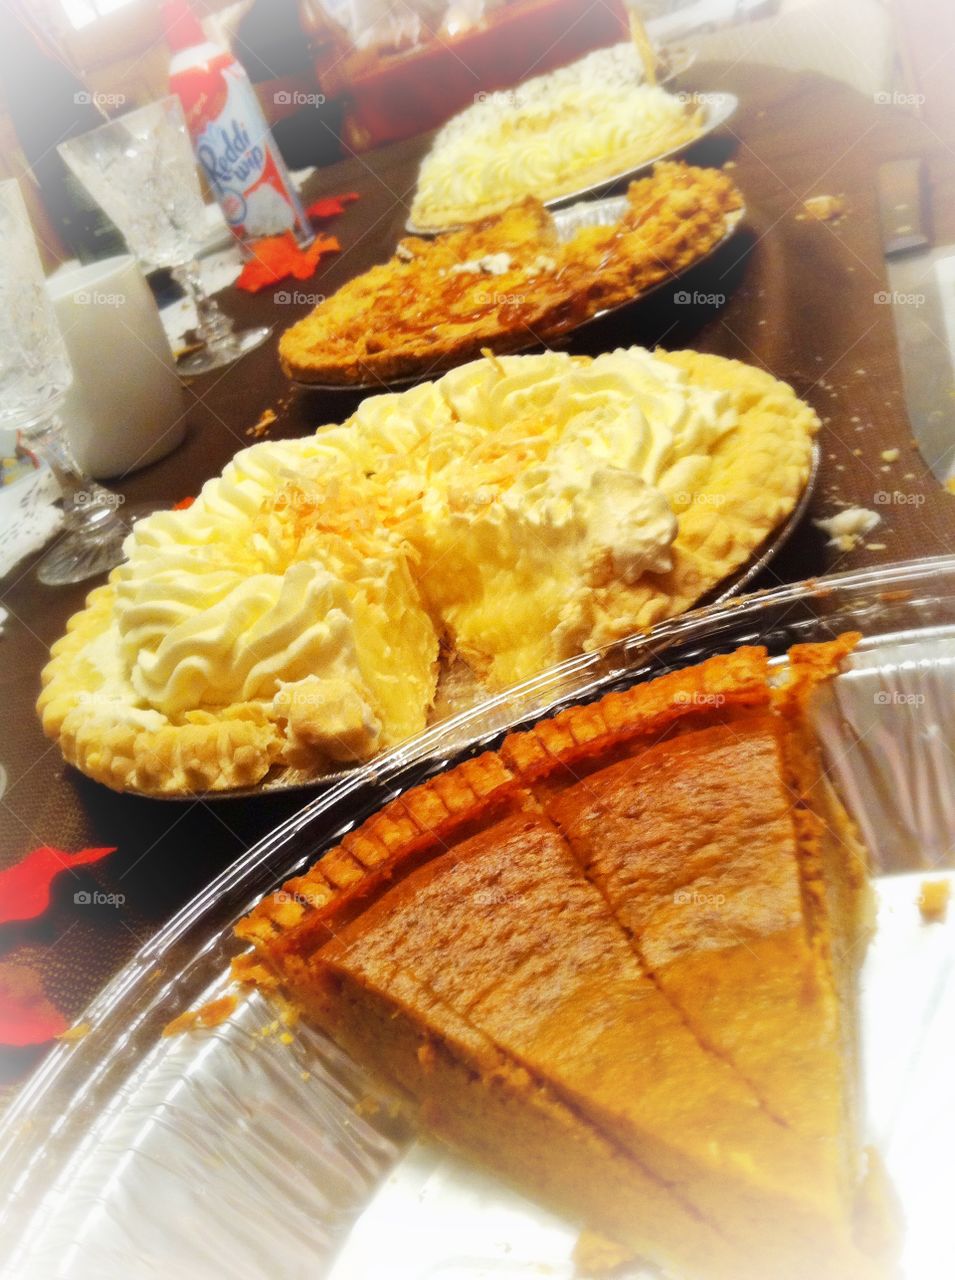 Those yummy pies. Thanksgiving pies